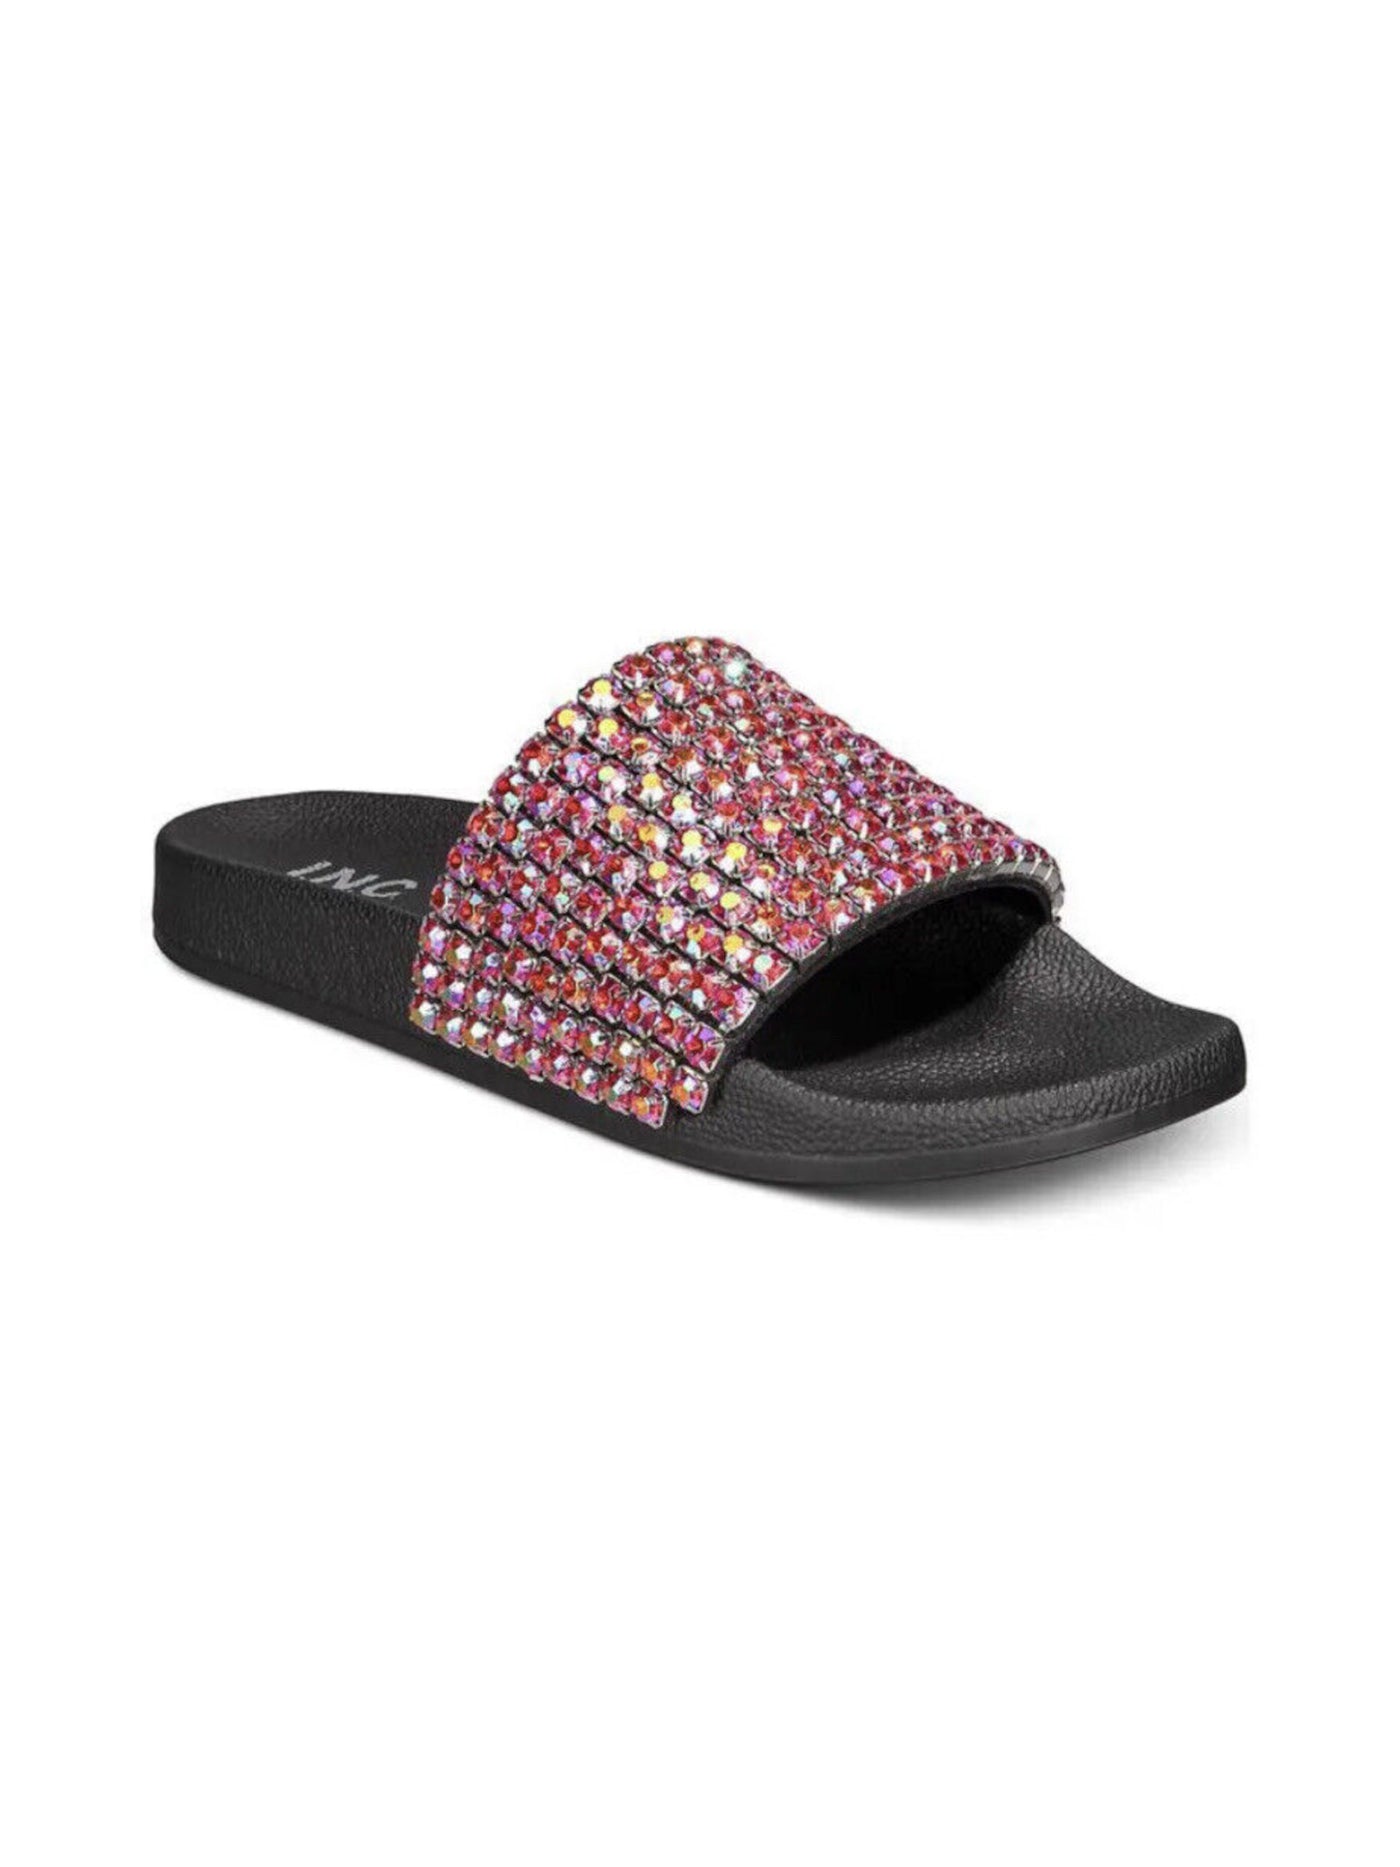 INC Womens Black Embellished Comfort Peymin Round Toe Slip On Slide Sandals Shoes 5 M